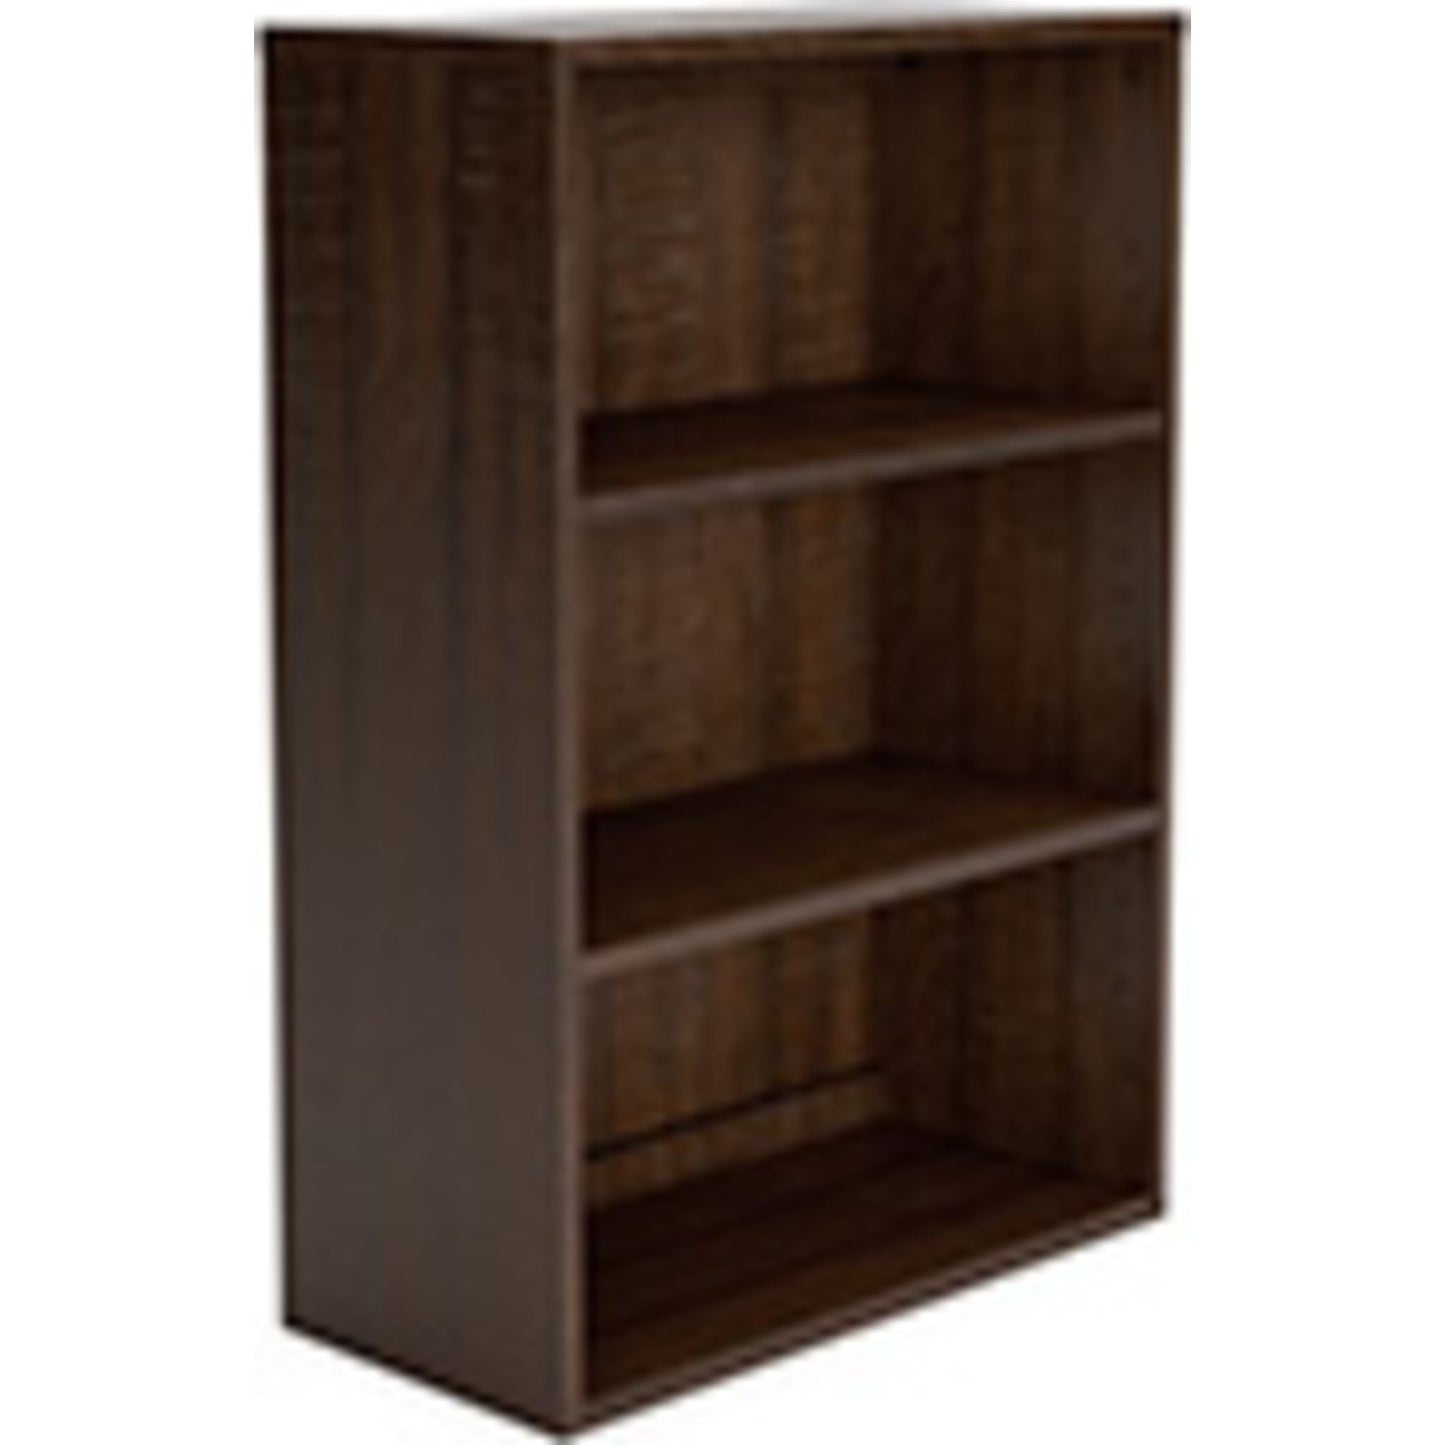 Camiburg Medium Bookcase - Warm Brown